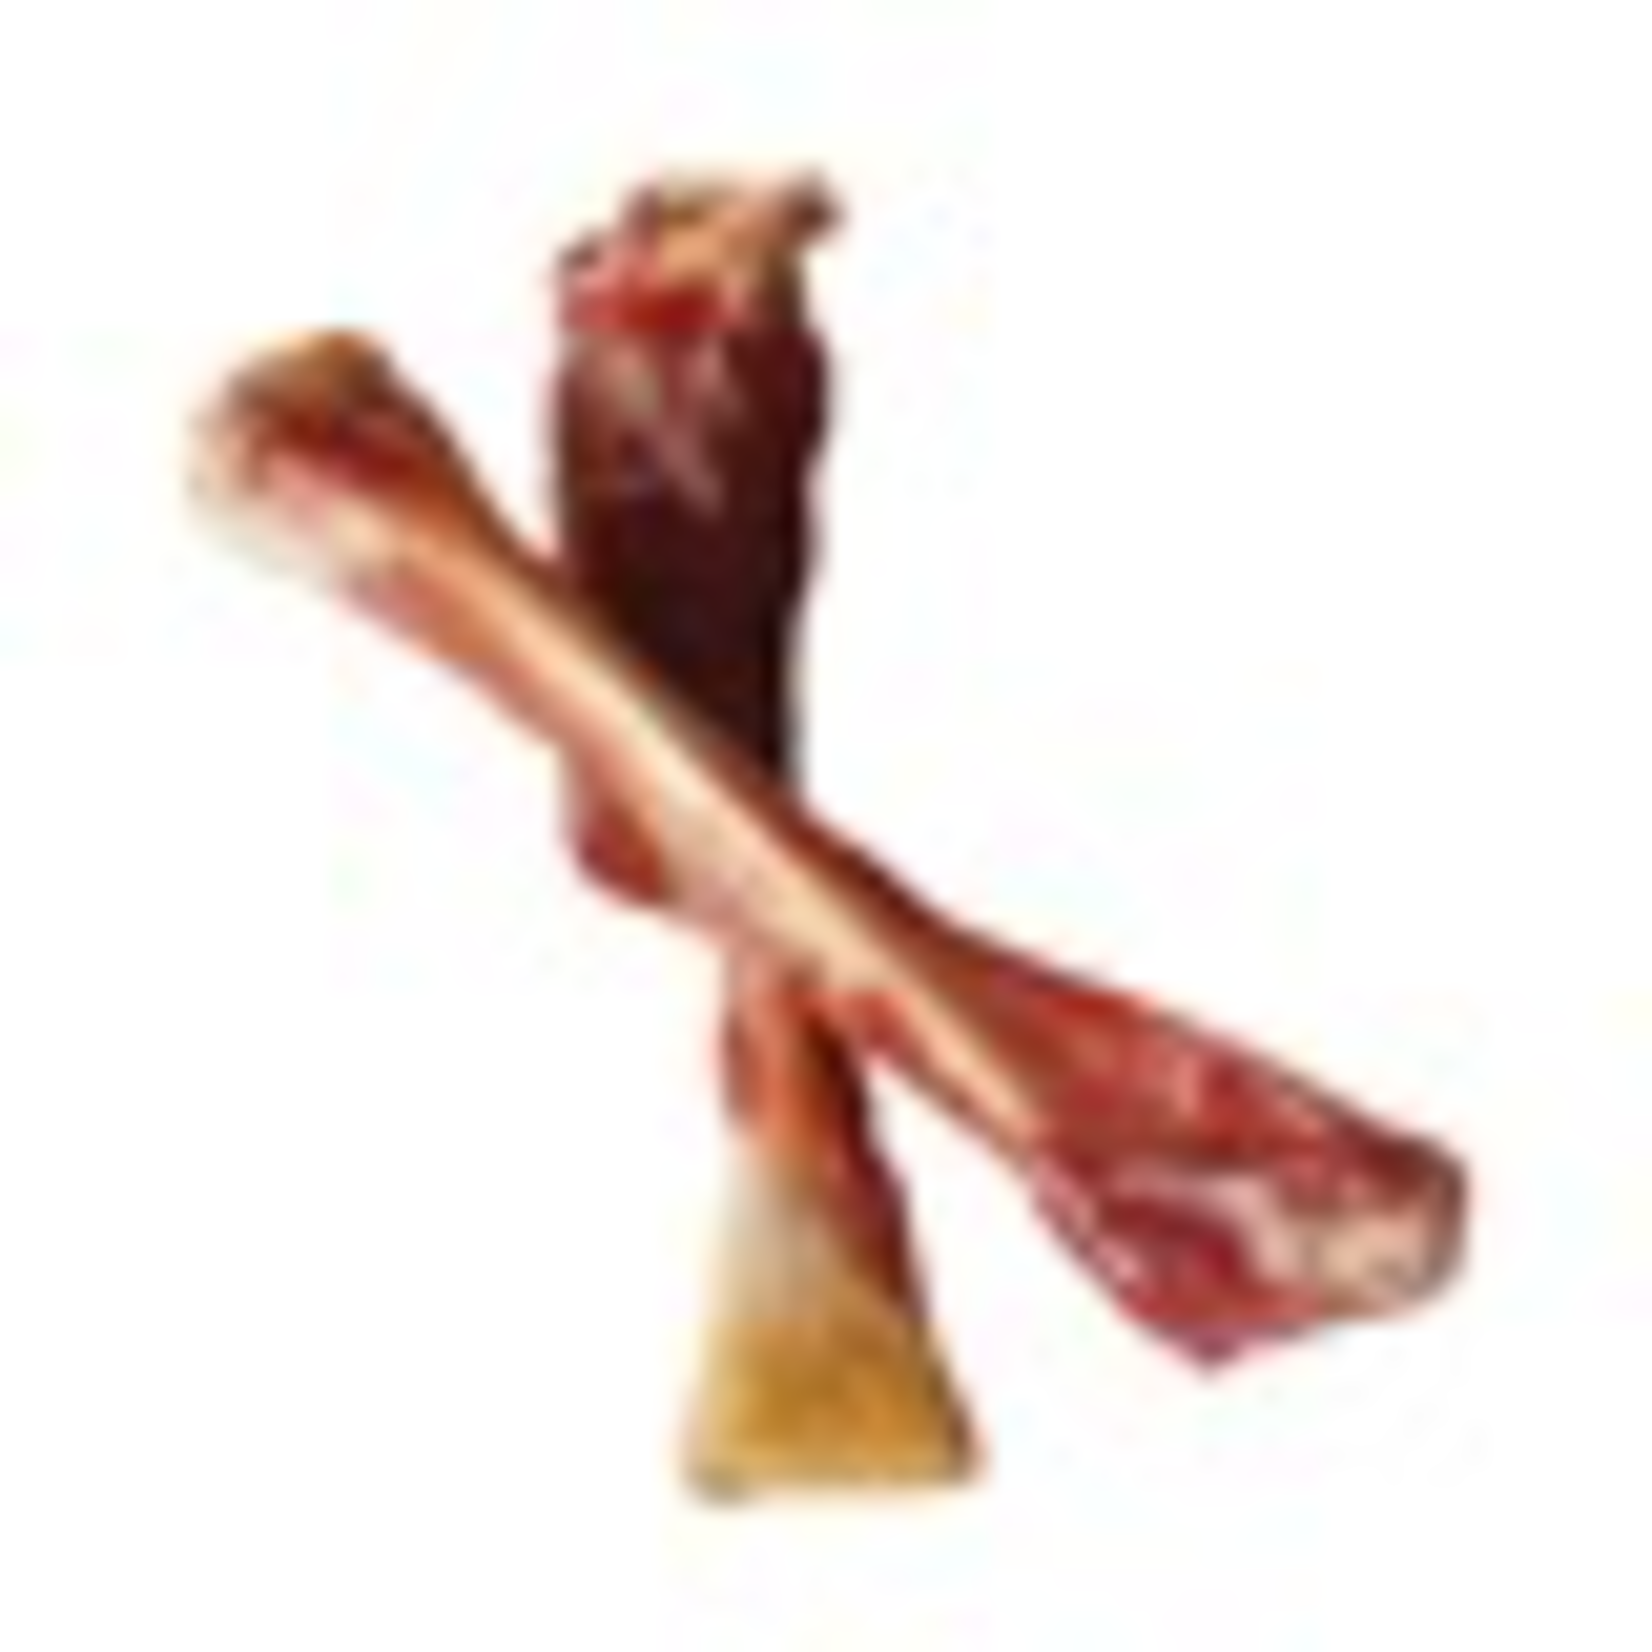 Charcuterie by Dogit Prosciutto Bone for Dogs - Small (Fibula) - Min Wt 40 g (1.4 oz)